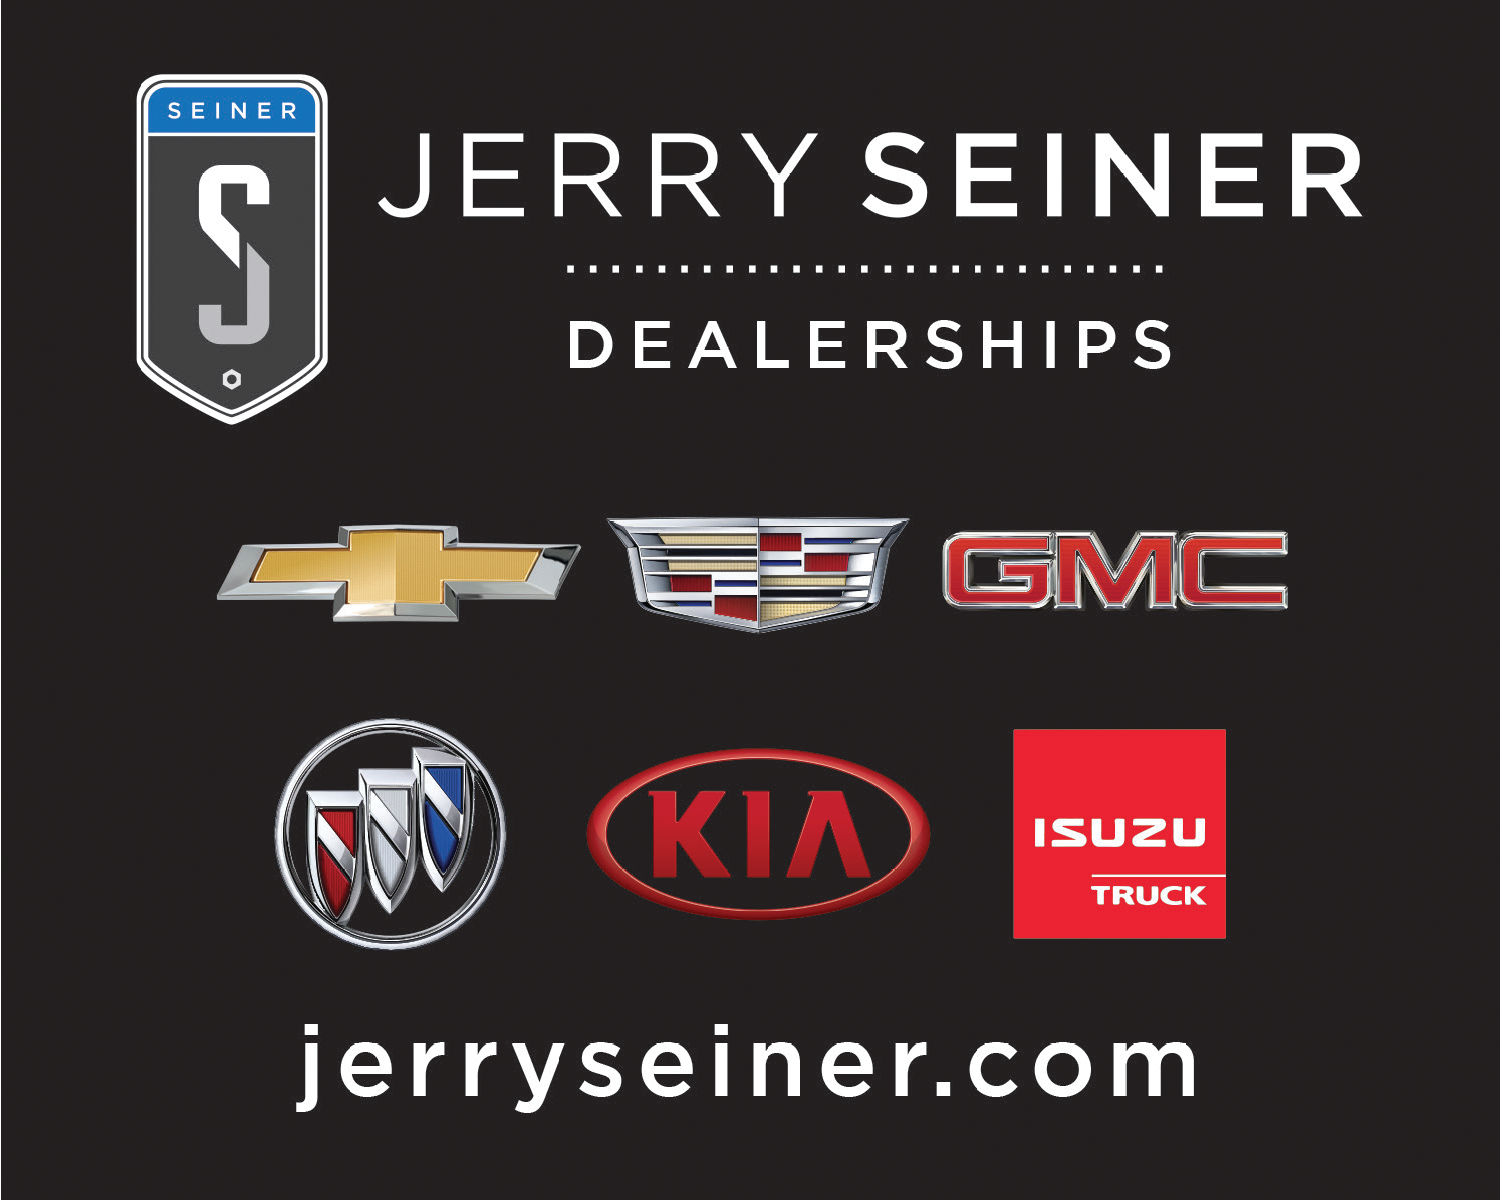 Jerry Seiner Automotive Dealerships